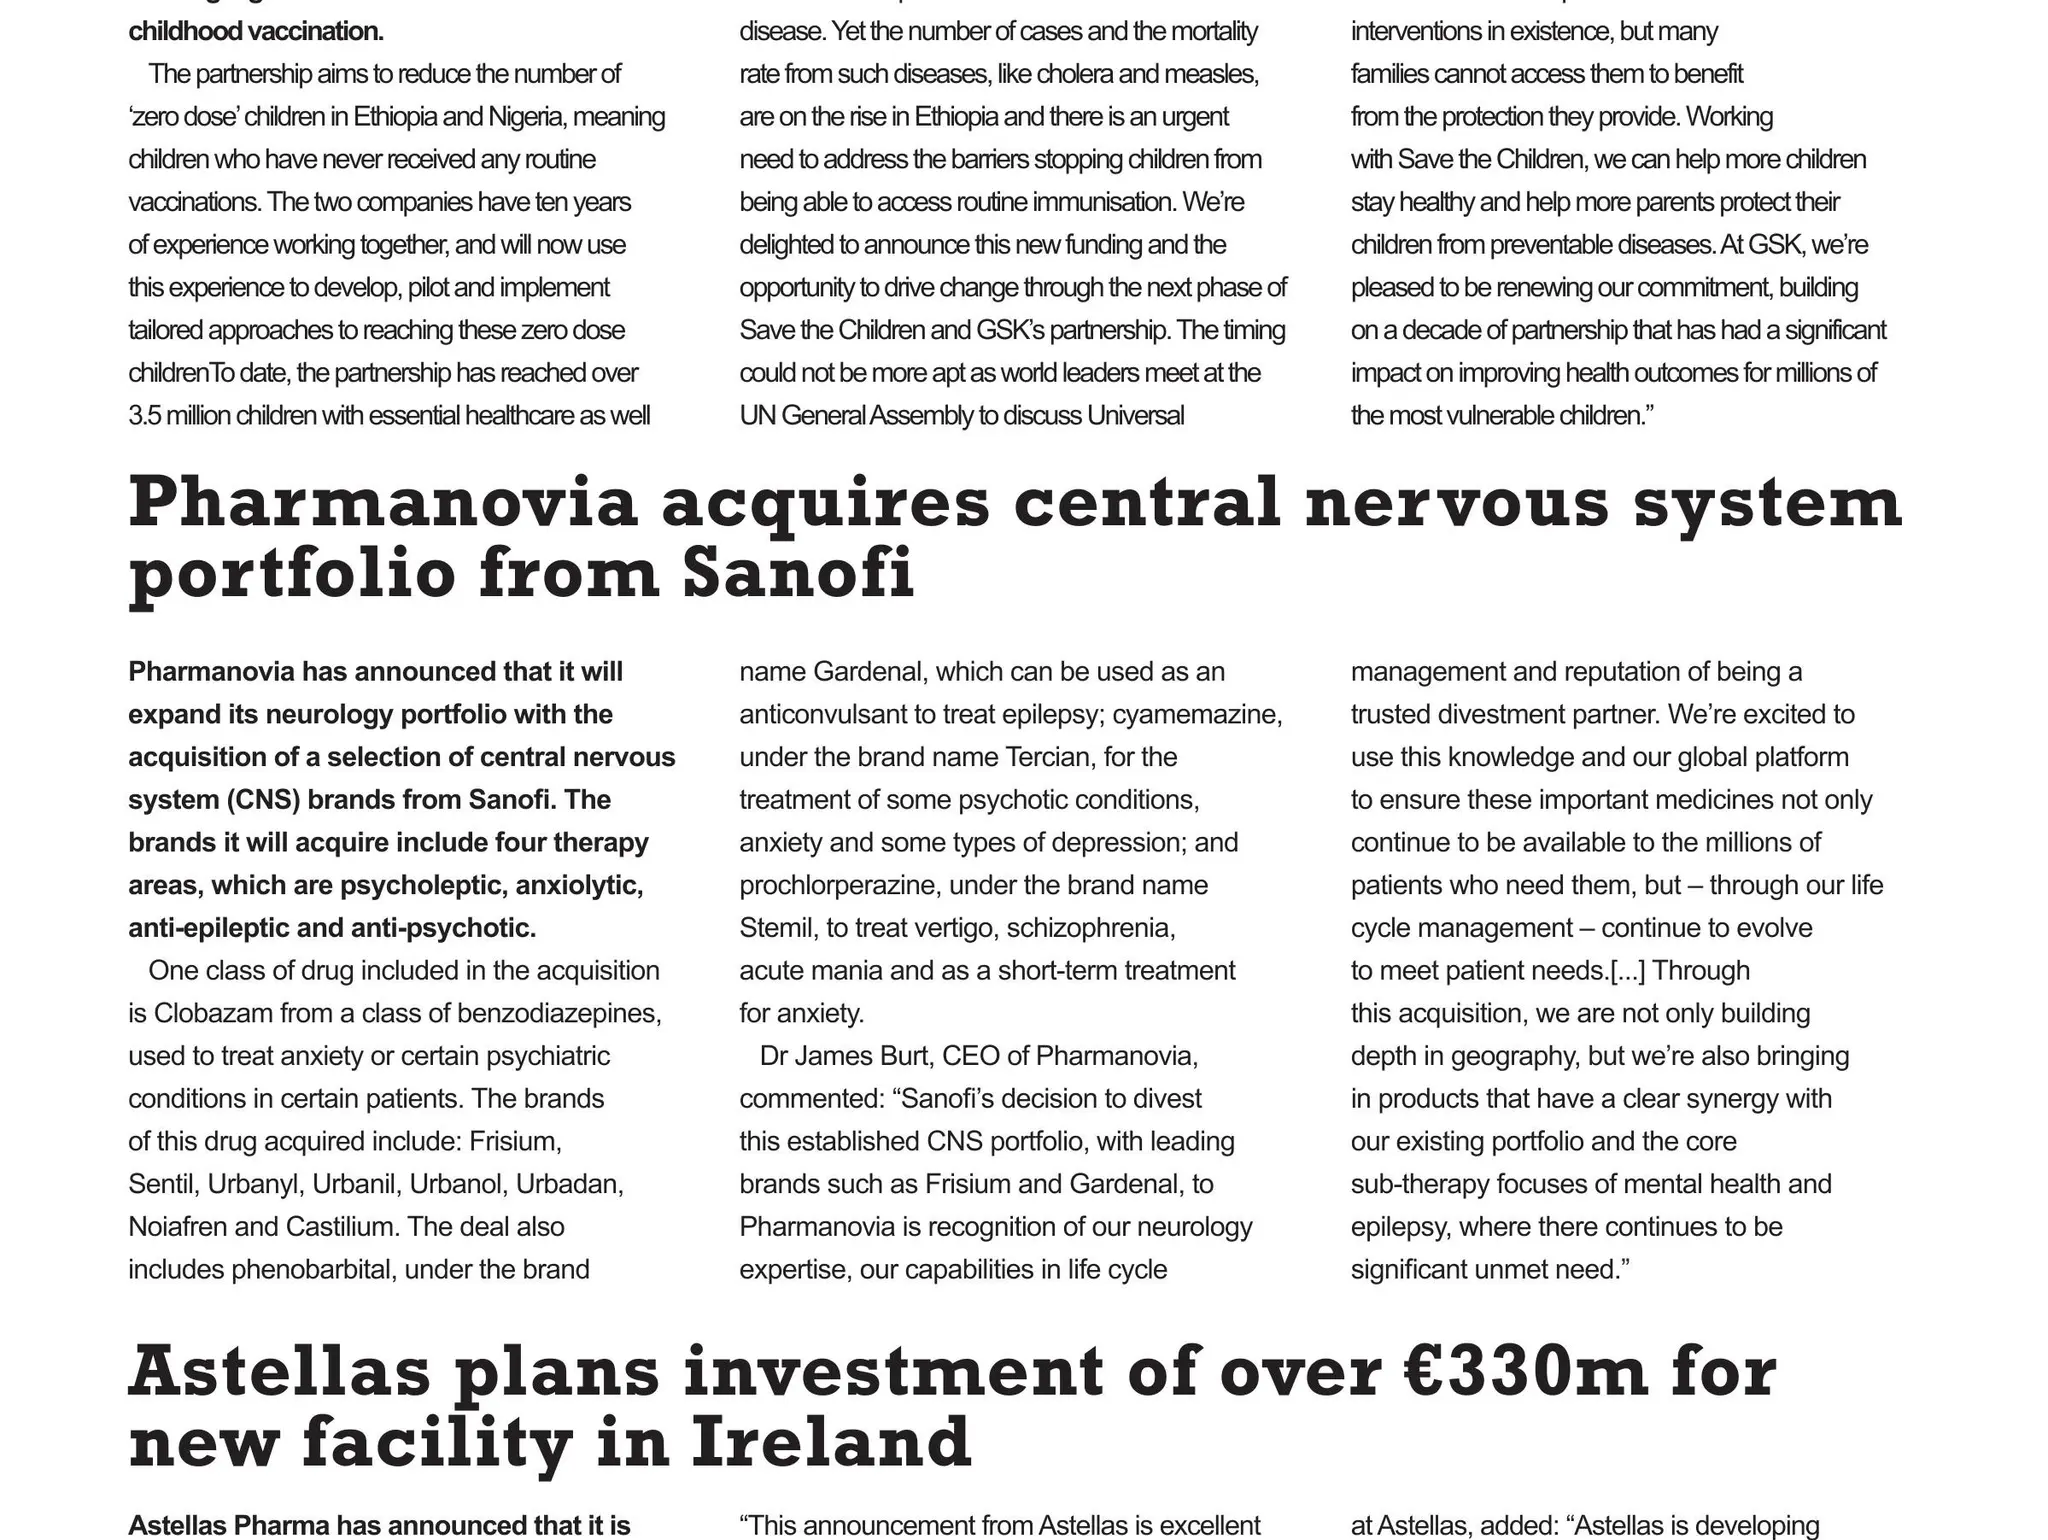 Pharmanovia acquires central nervous system portfolio from Sanofi